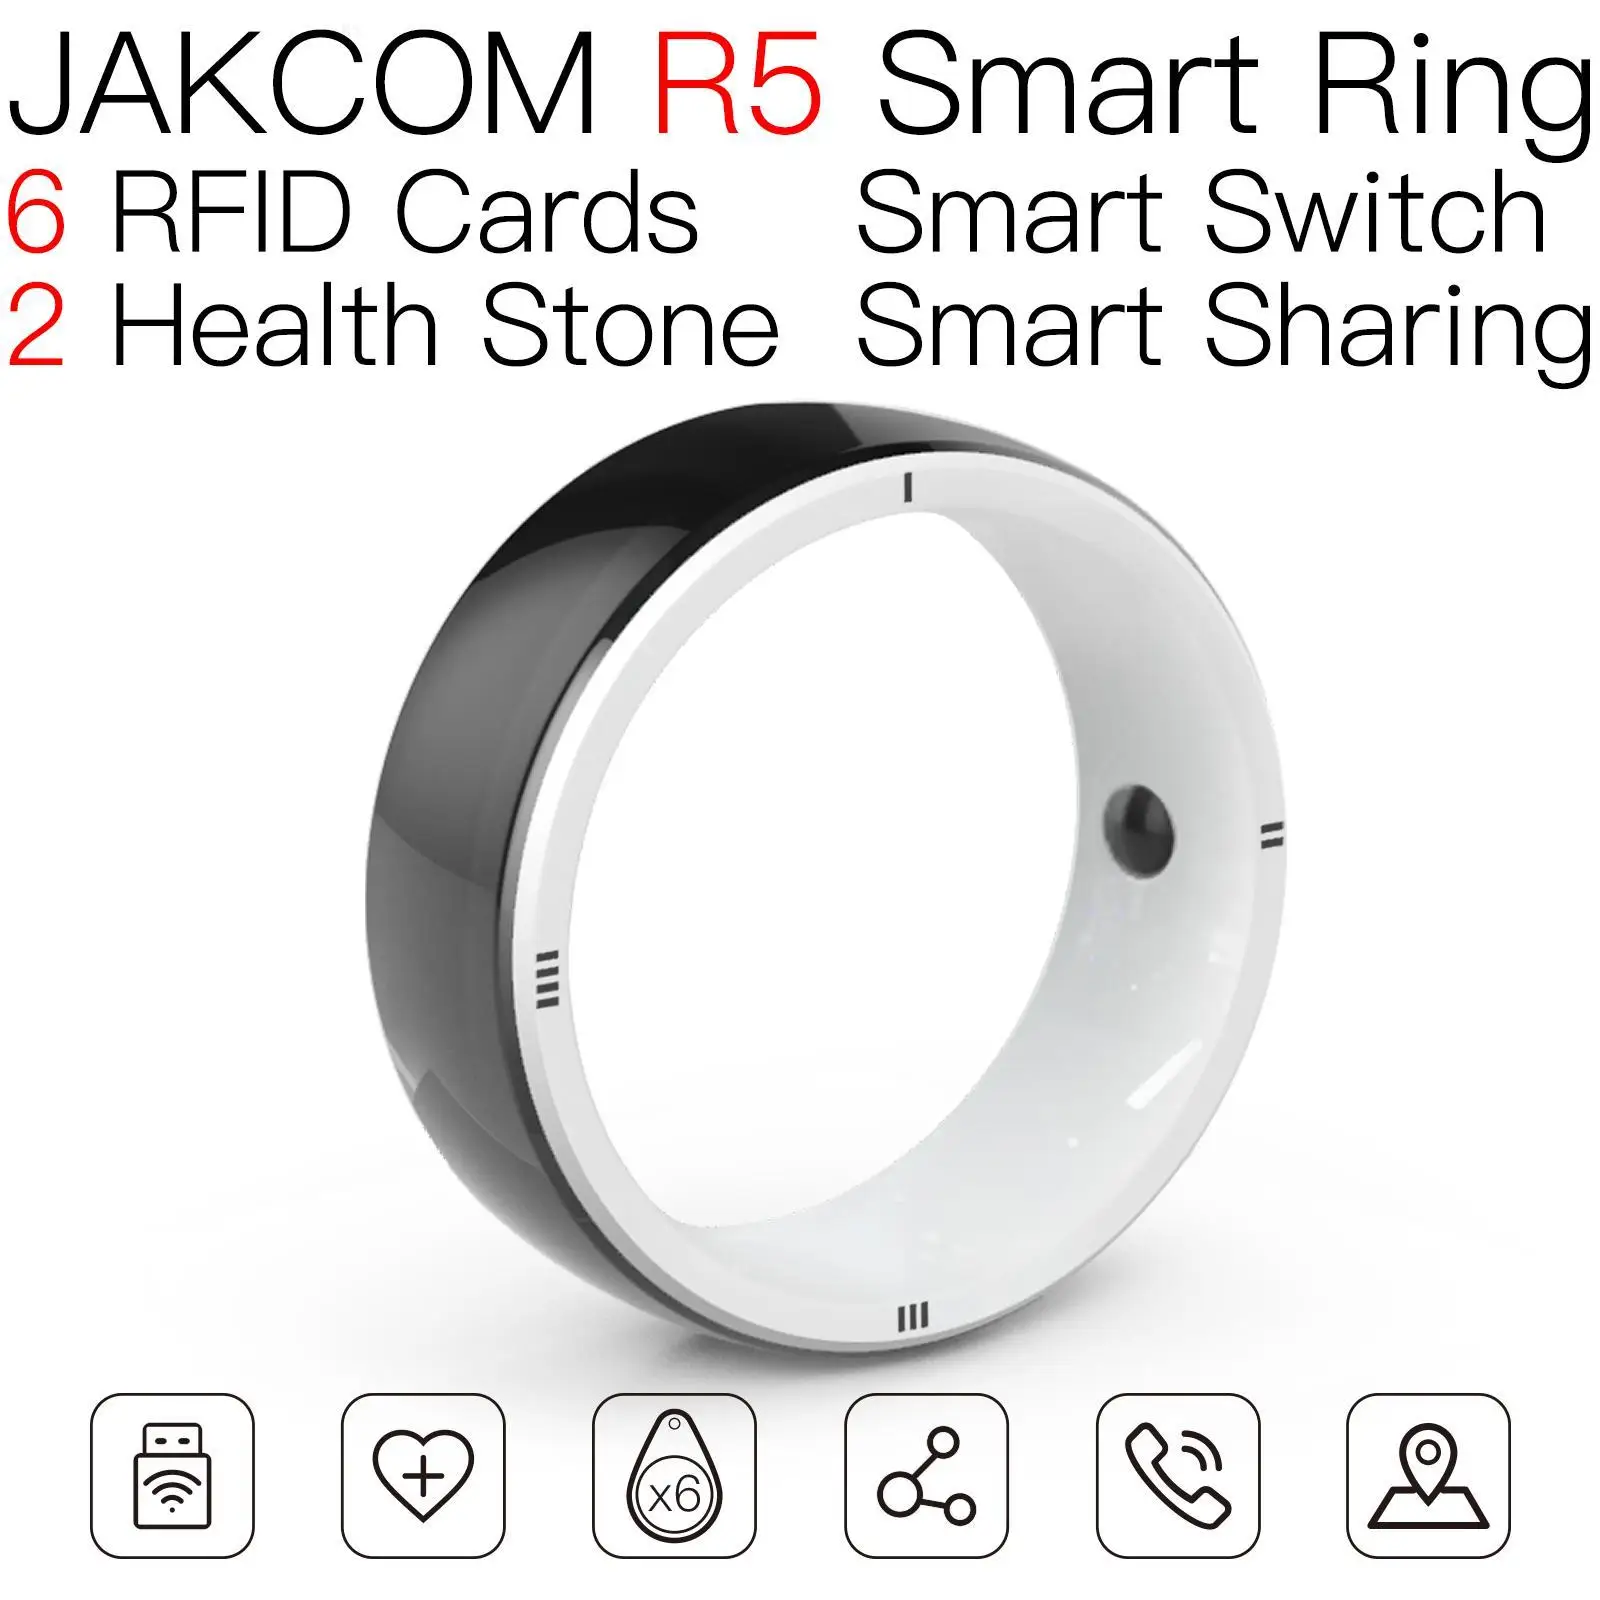 

JAKCOM R5 Smart Ring Super value than nfc tags programmable 216 mini t5577 card 100 pcs mhz uid 125khz dual frequency uart